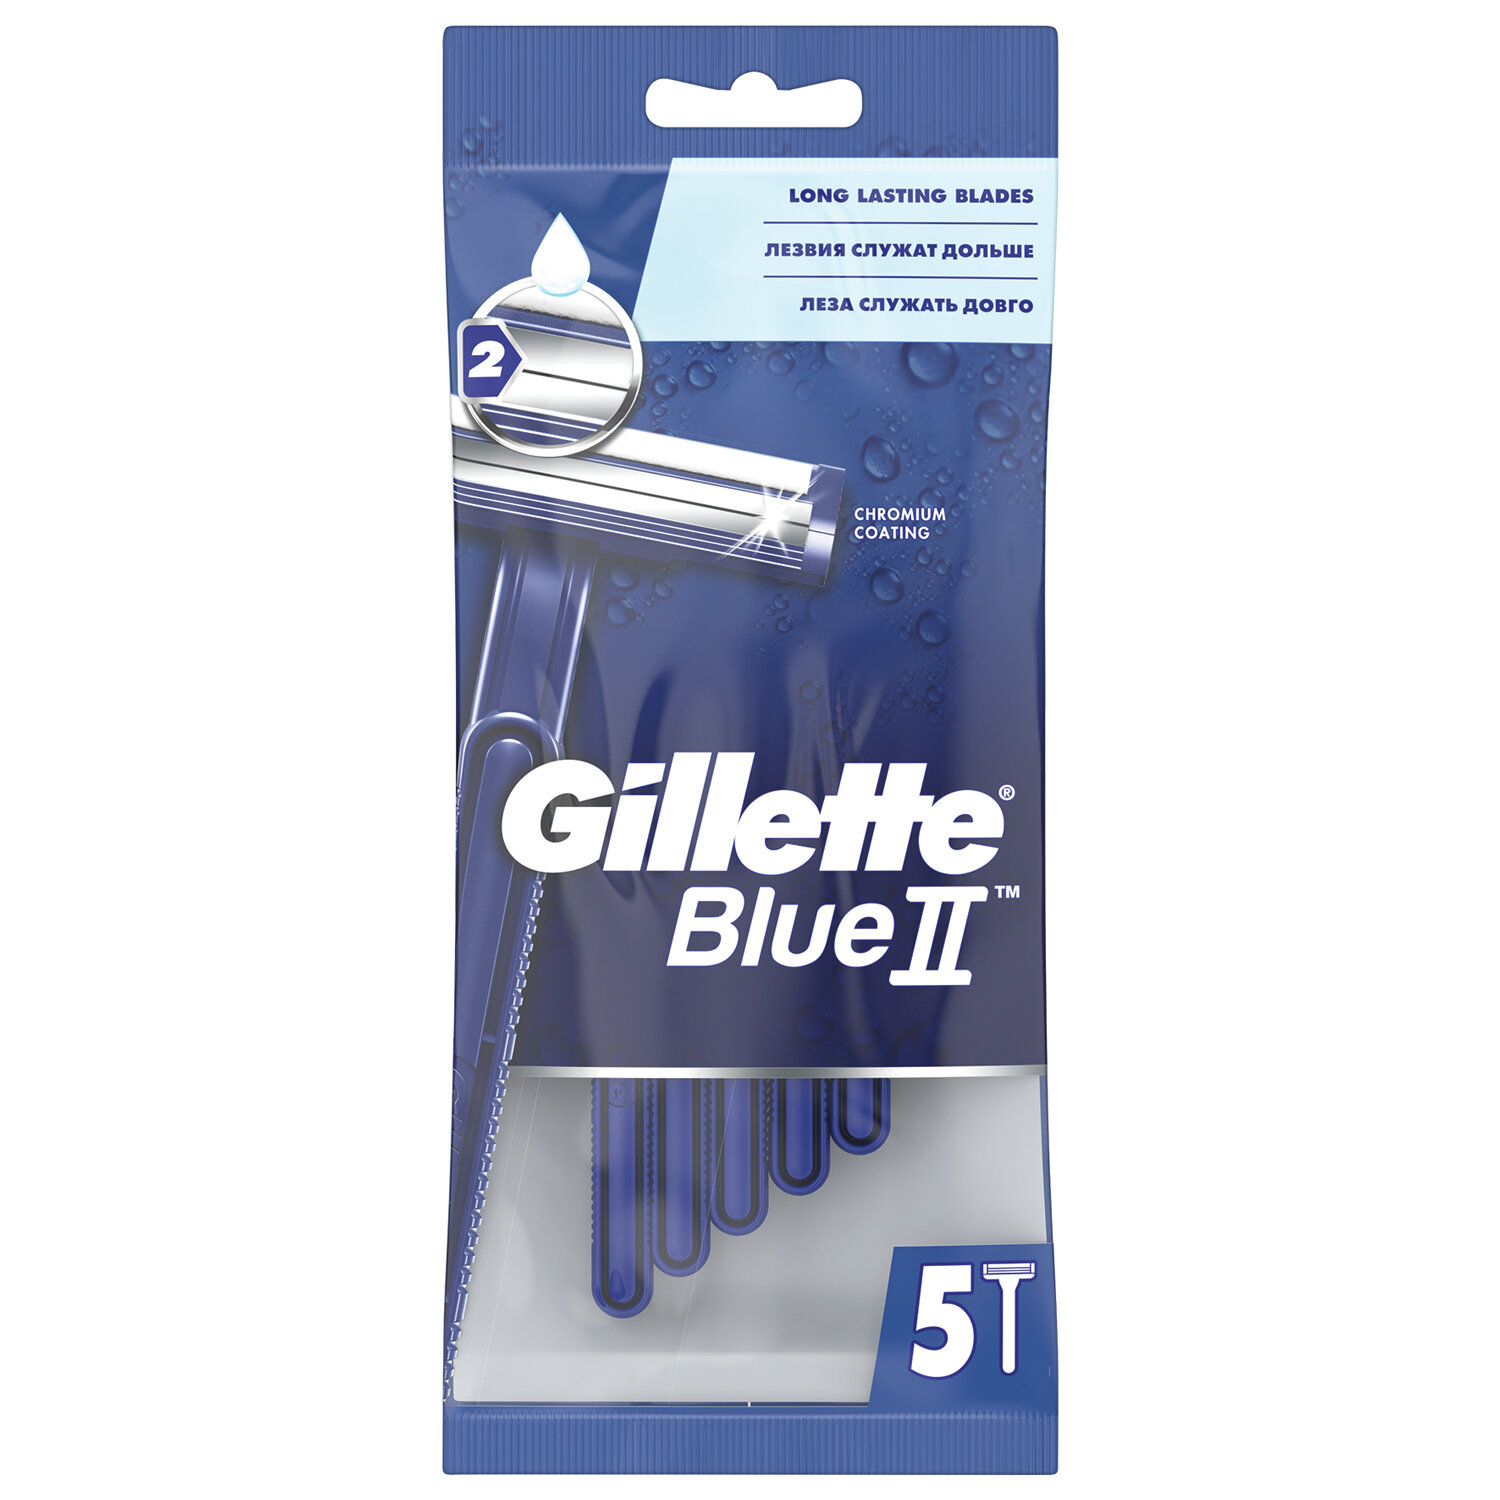 GILLETTE Бритвы одноразовые GILLETTE 602766 BLUE 2, для мужчин, комплект 4 упаковки 5 шт.